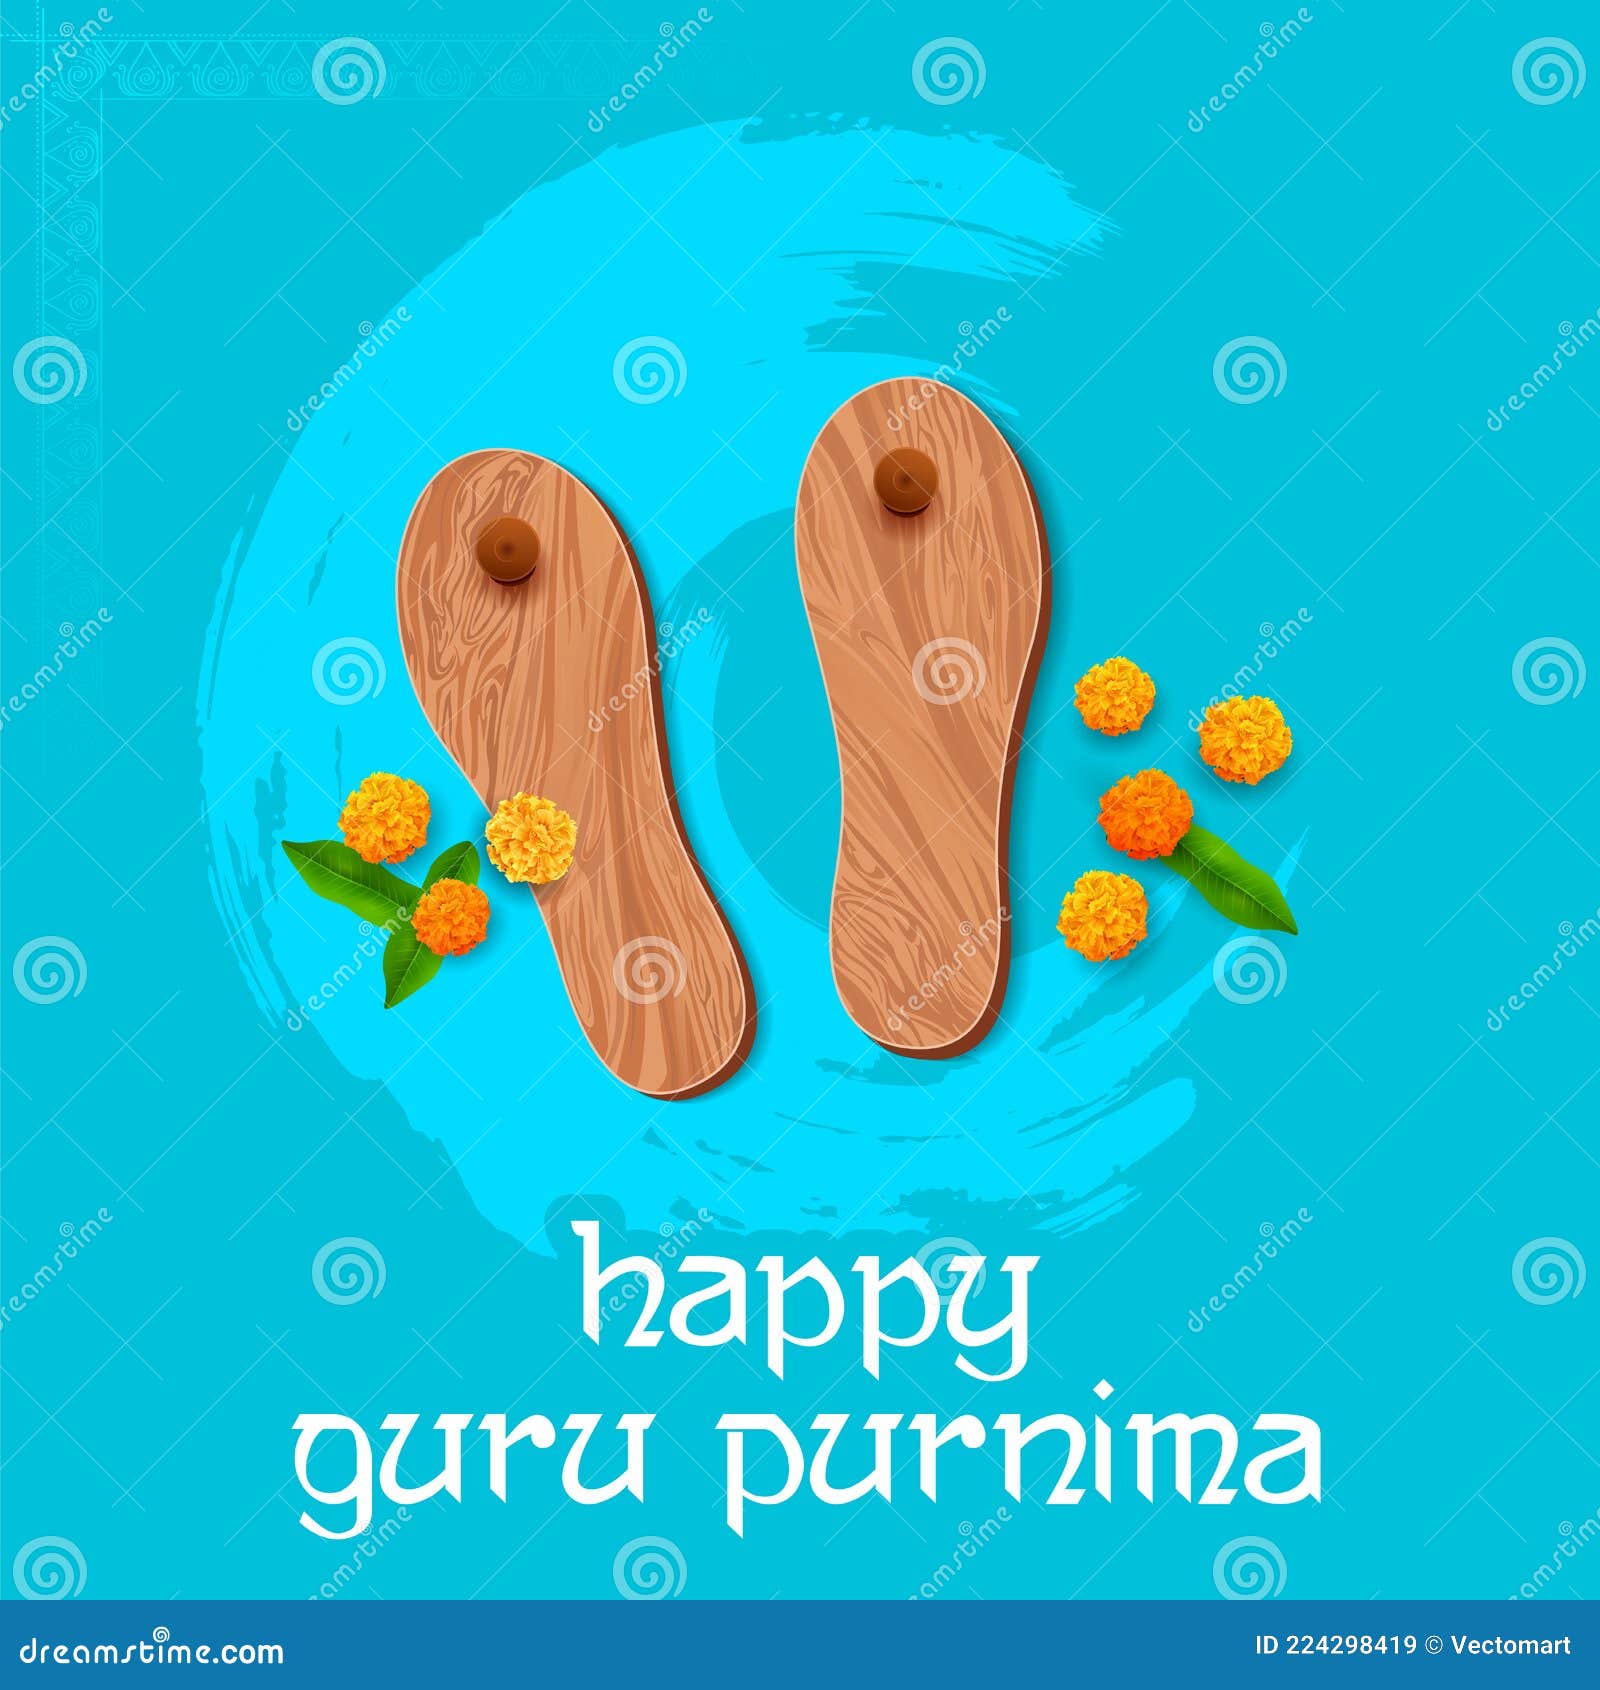 religious holiday background for happy guru purnima festival celebrated in india